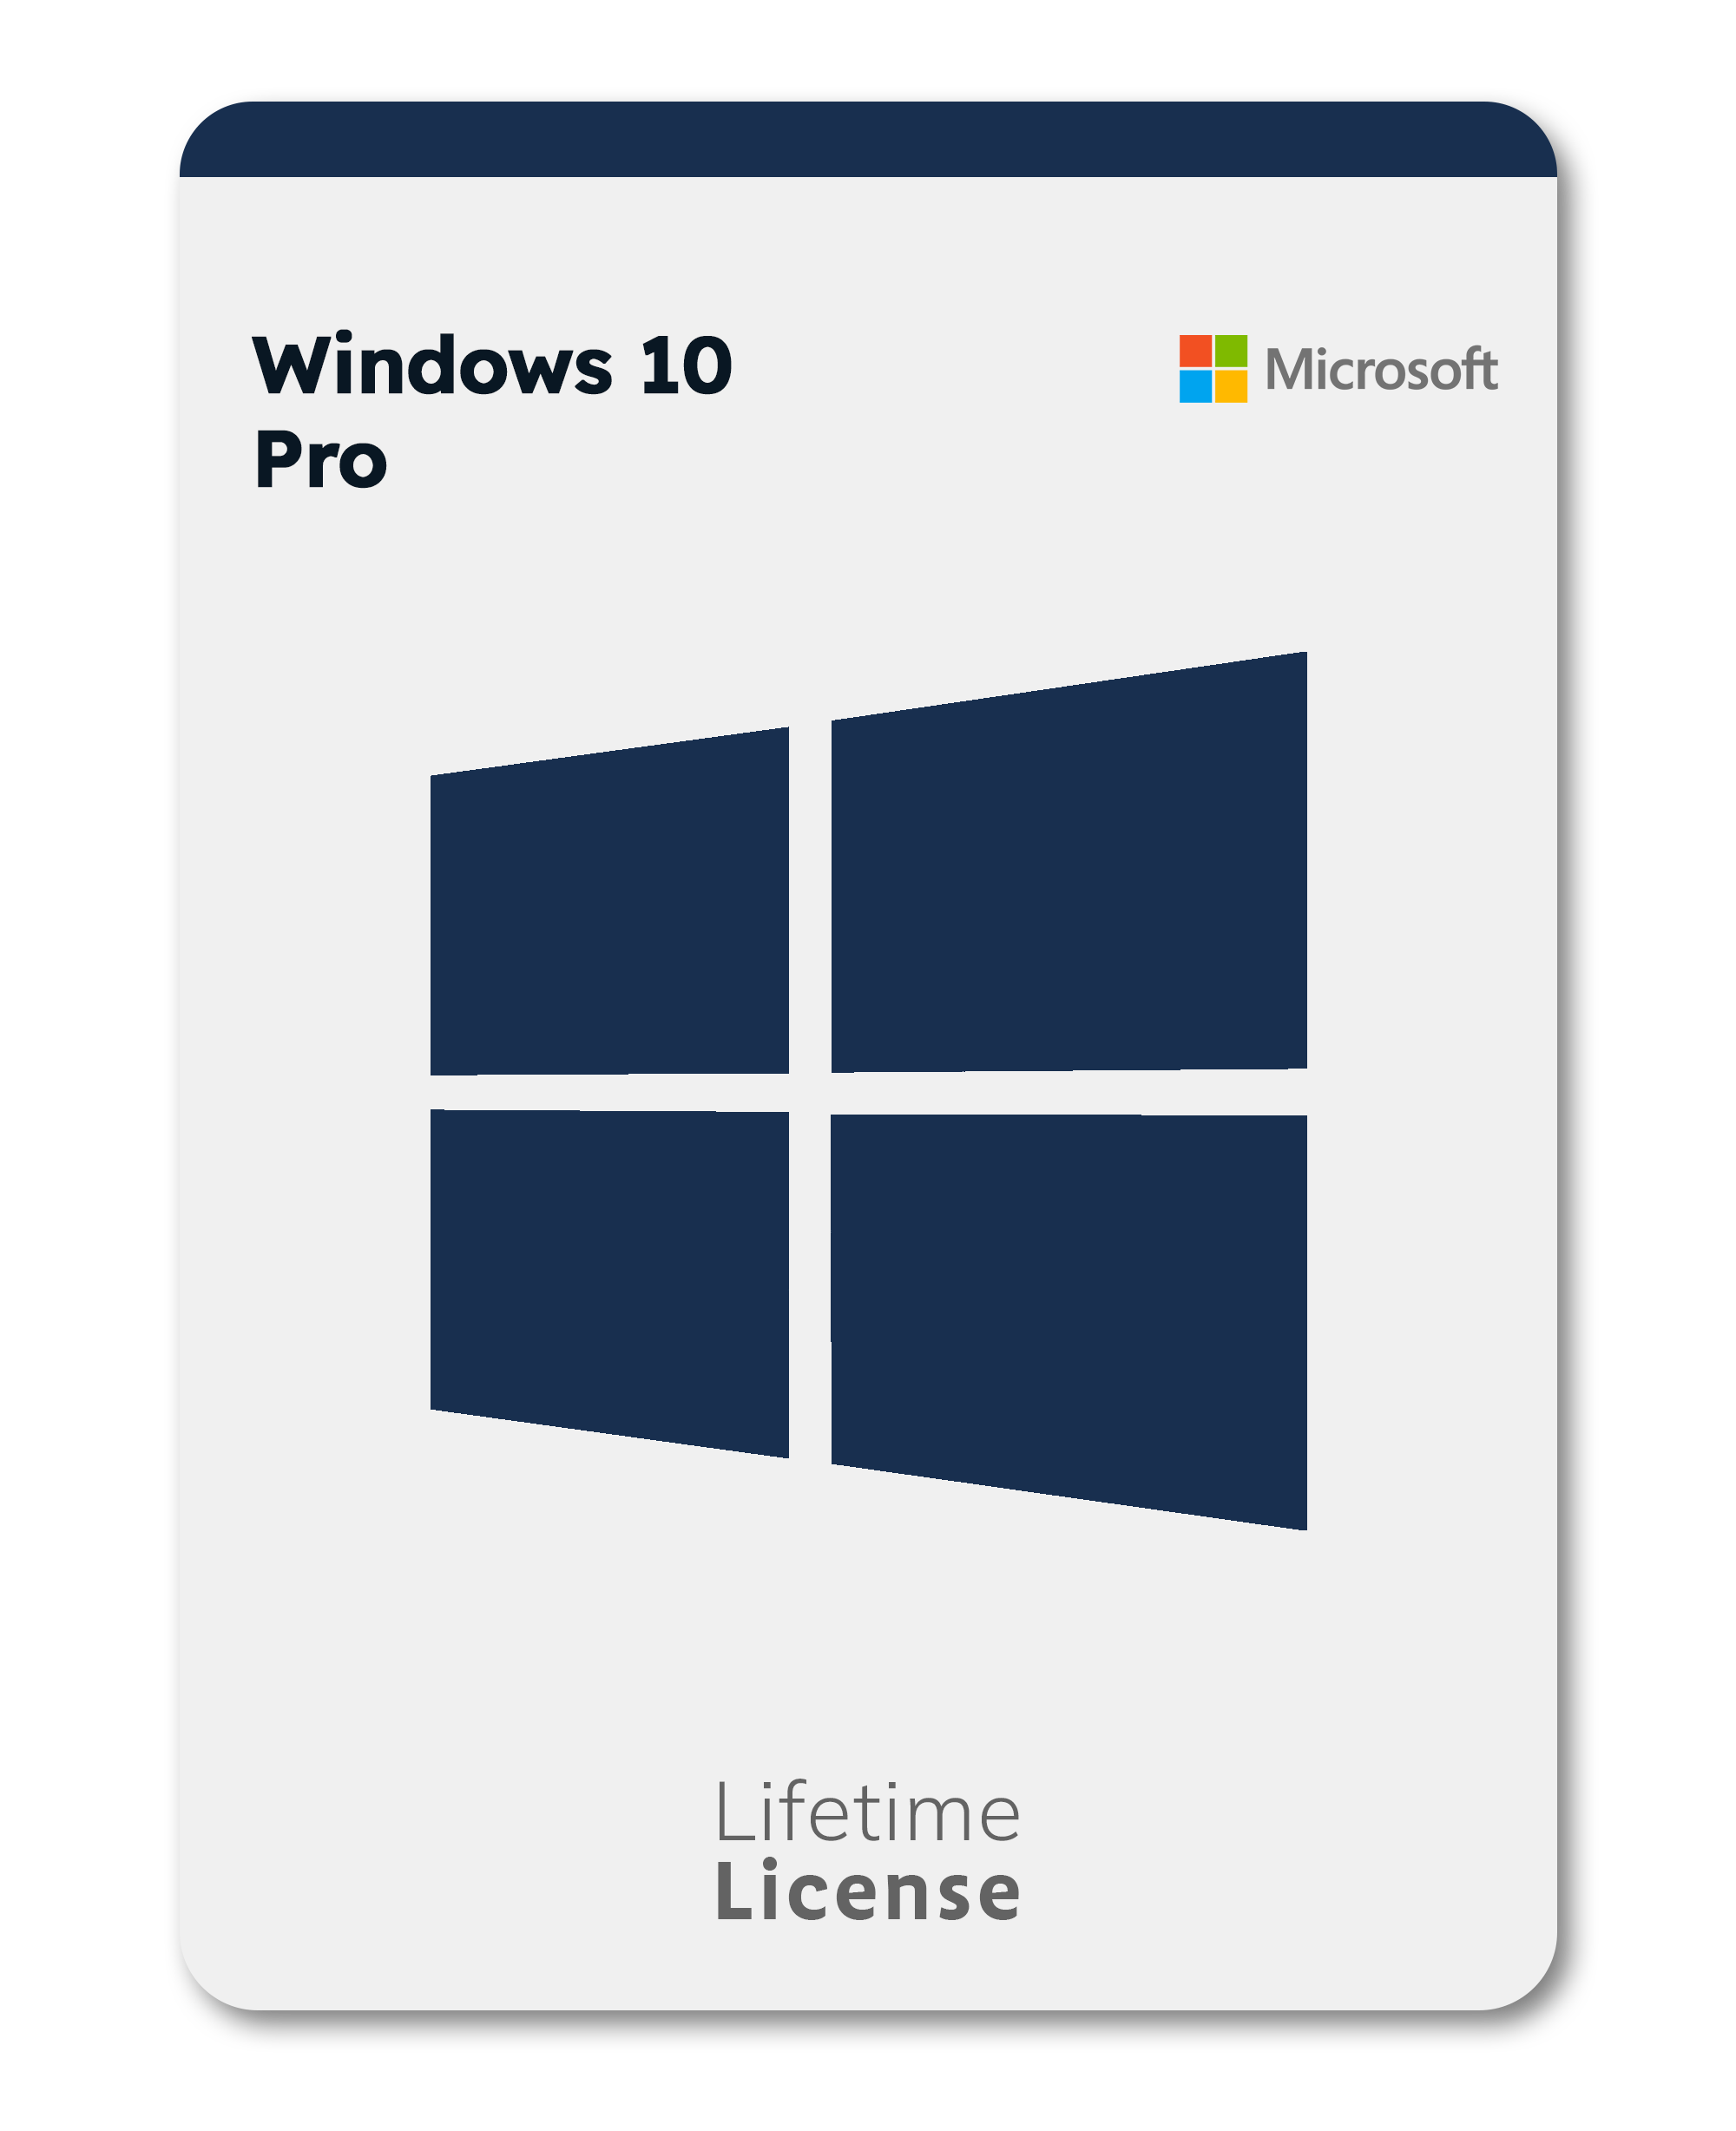 Windows 10 Pro – Lifetime